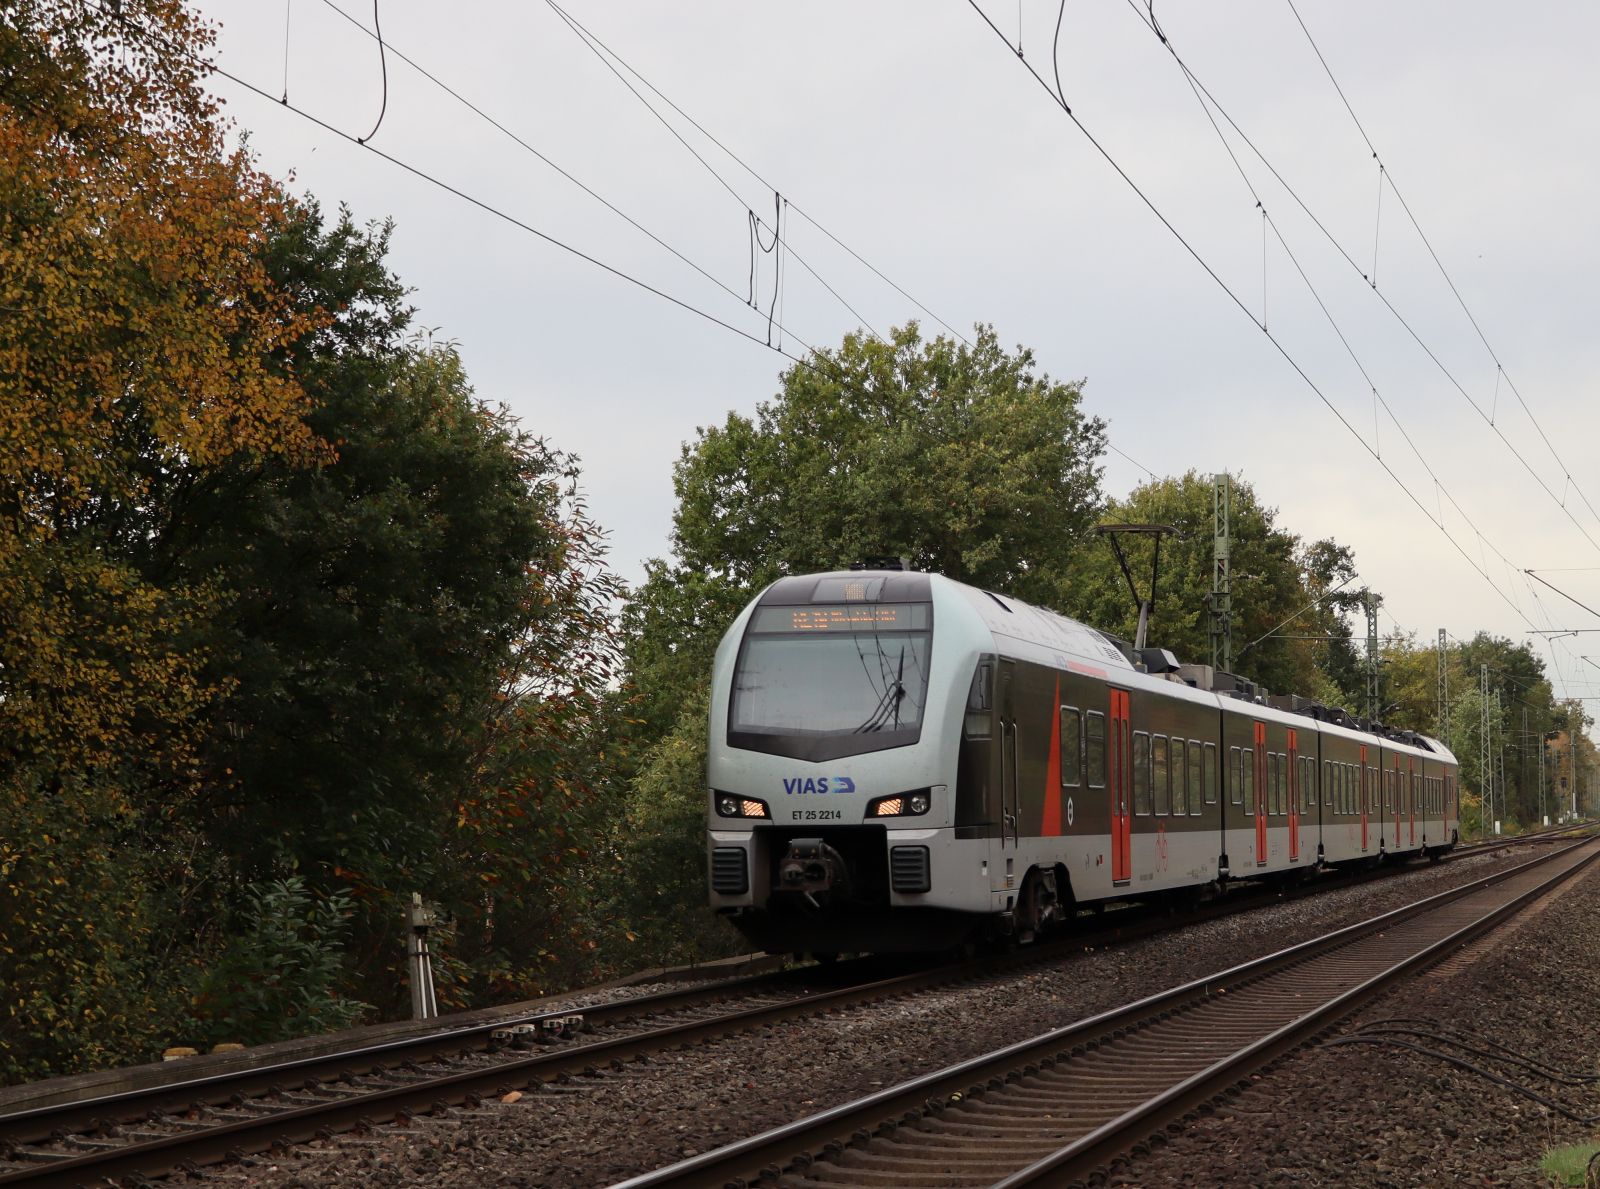 VIAS Triebzug ET 25 2214 bei Bahnübergang Grenzweg Hamminkeln 03-11-2022.

VIAS treinstel ET 25 2214 bij overweg Grenzweg Hamminkeln 03-11-2022.